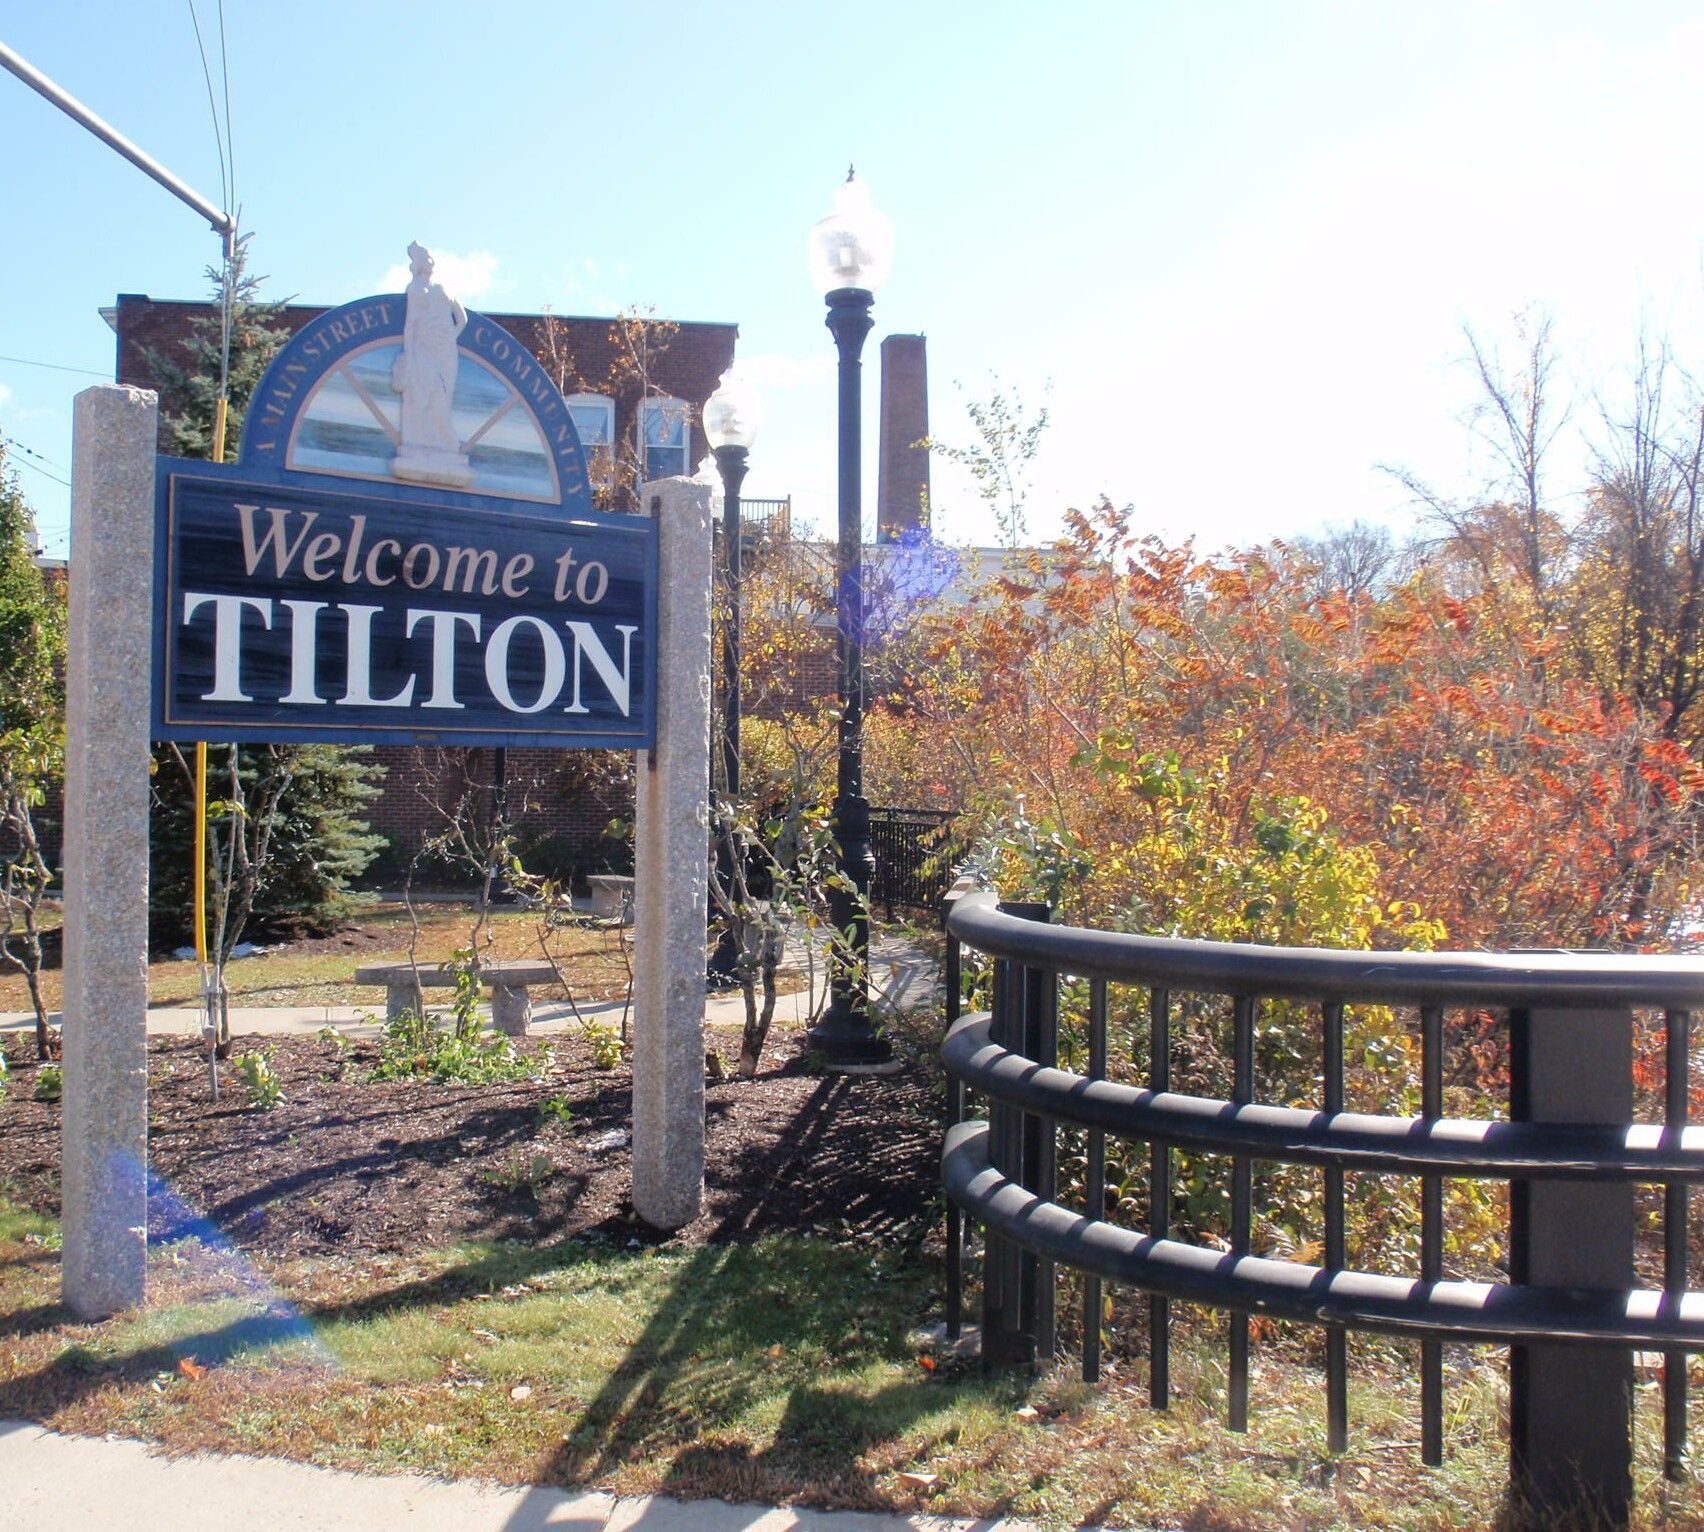 Welcome to Tilton